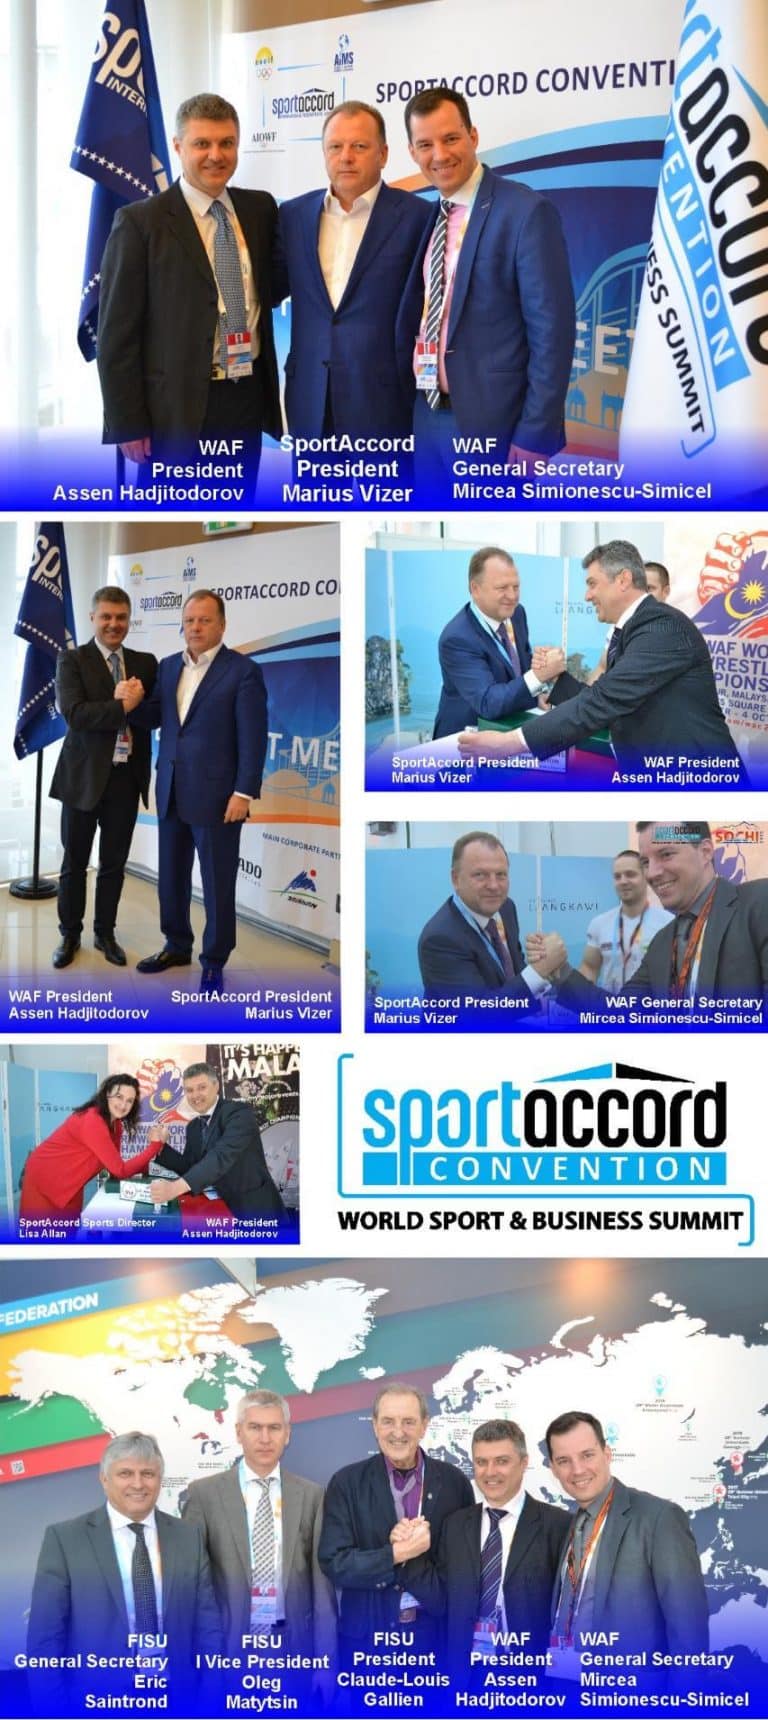 SportAccord Convention, Assen Hadjitodorov, Marius Vizer, Mircea Simionescu-Simicel